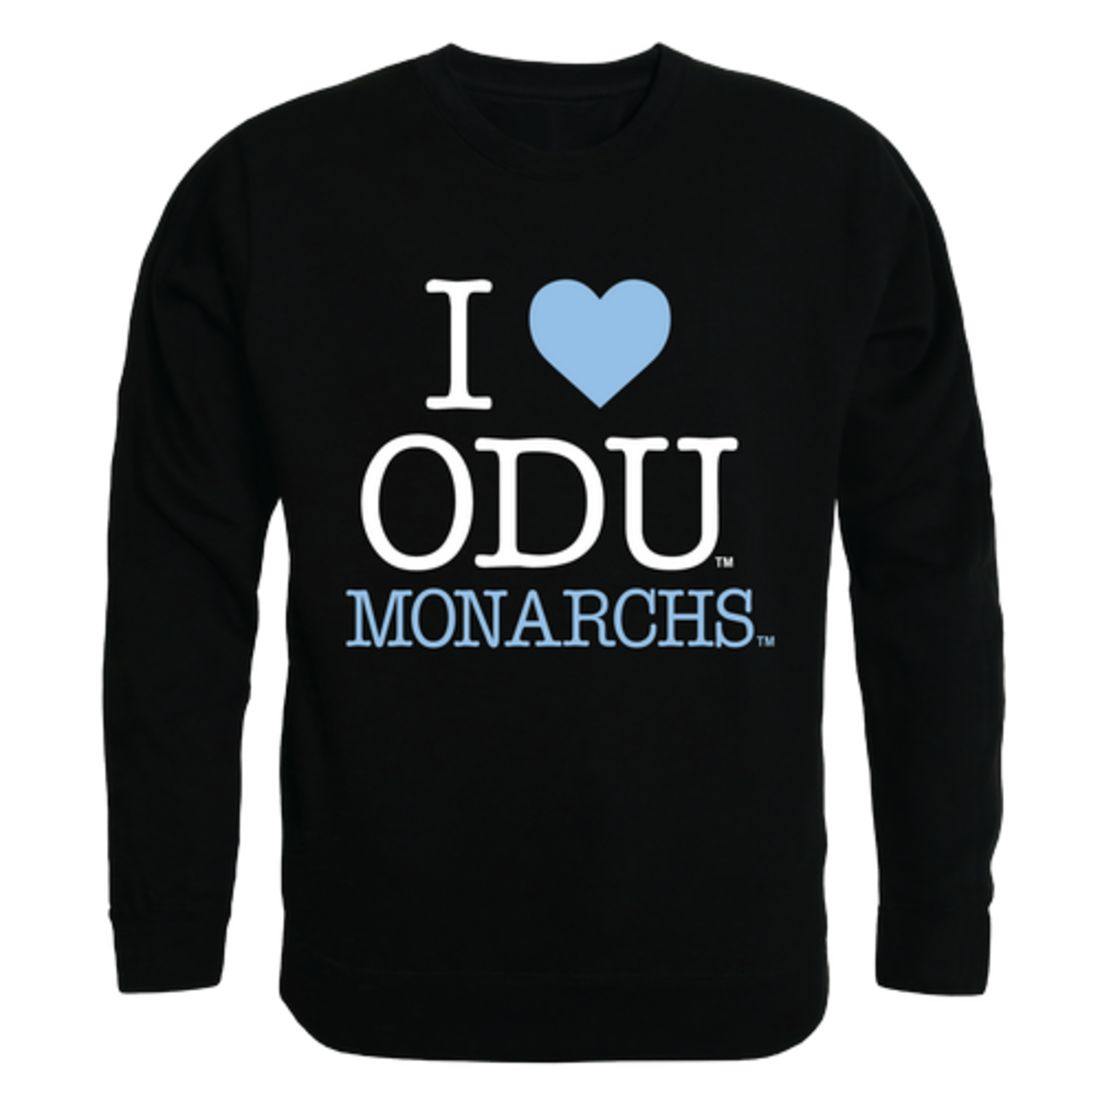 I Love ODU Old Dominion University Monarchs Crewneck Pullover Sweatshirt Sweater-Campus-Wardrobe